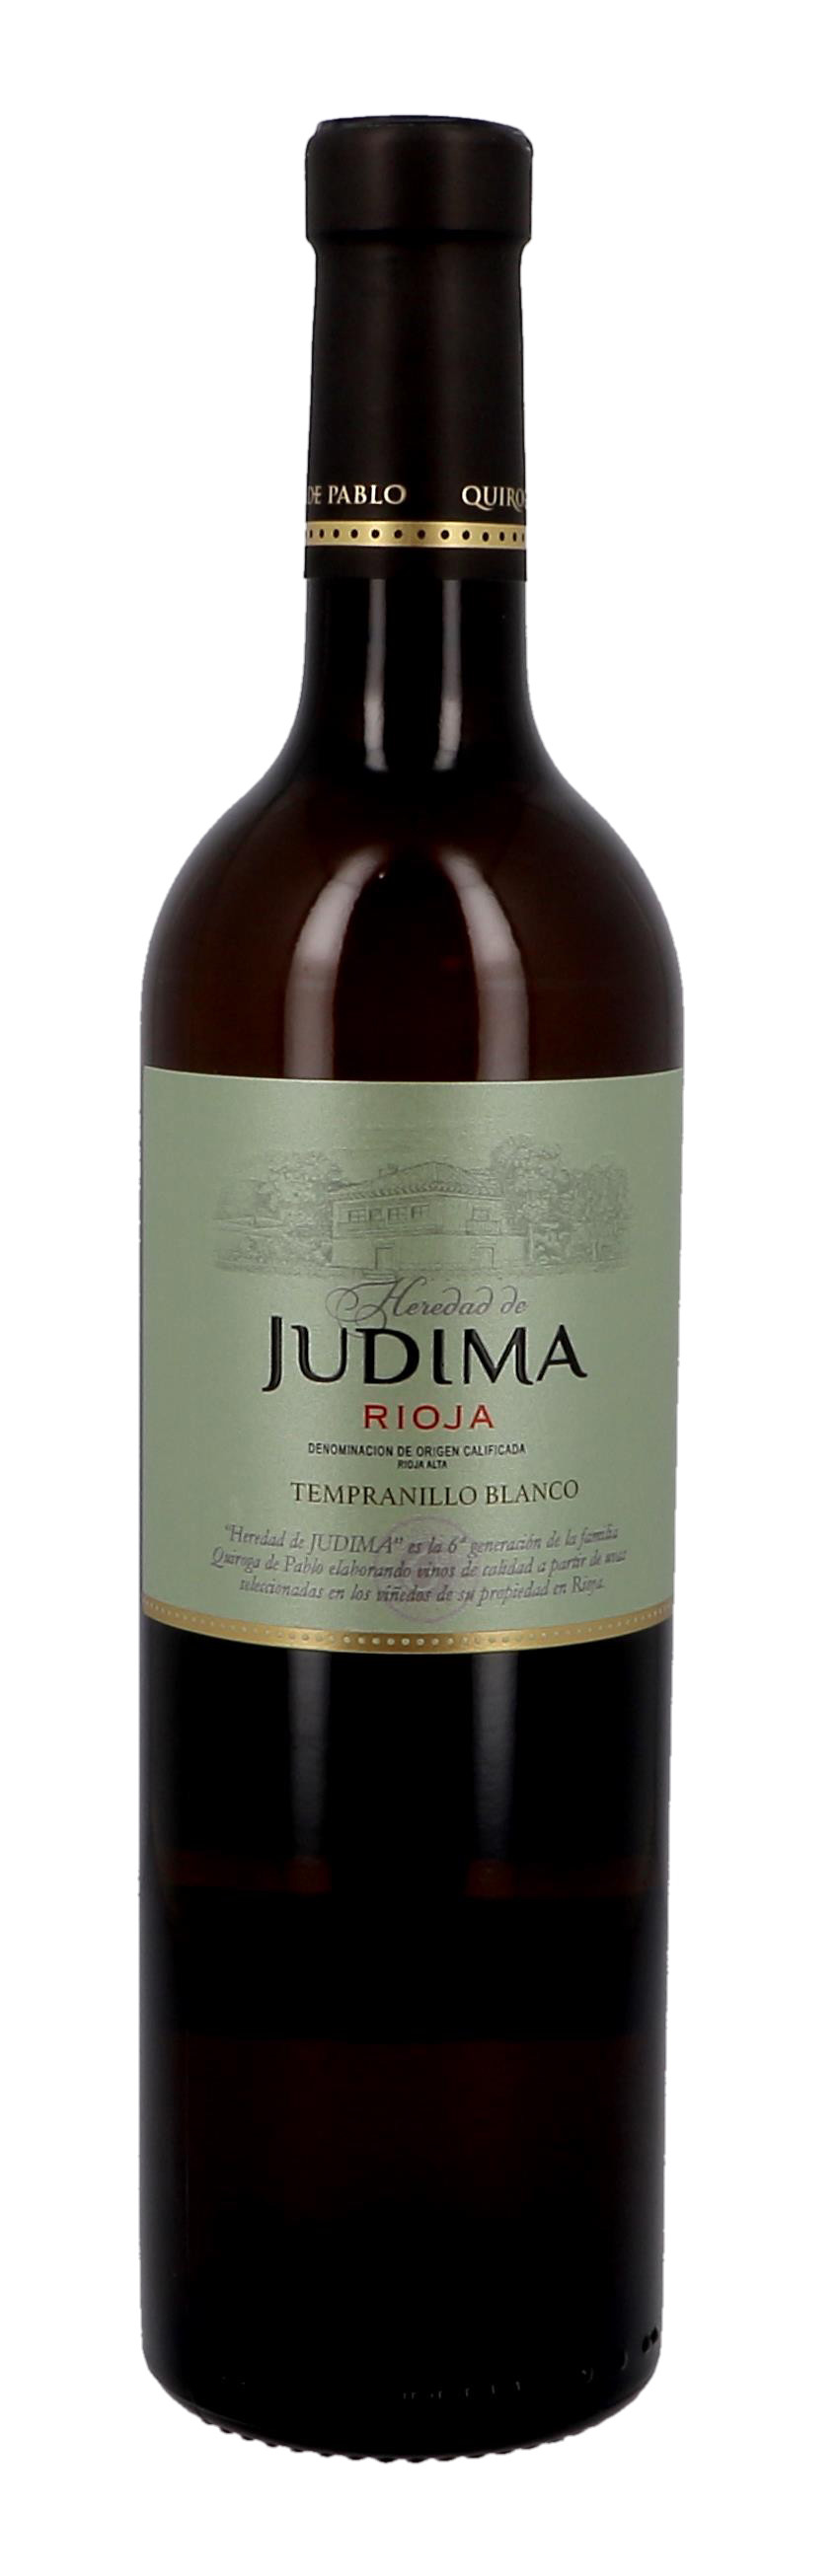 Heredad de Judima Tempranillo blanco 75cl Rioja Bodegas Quiroga de Pablo